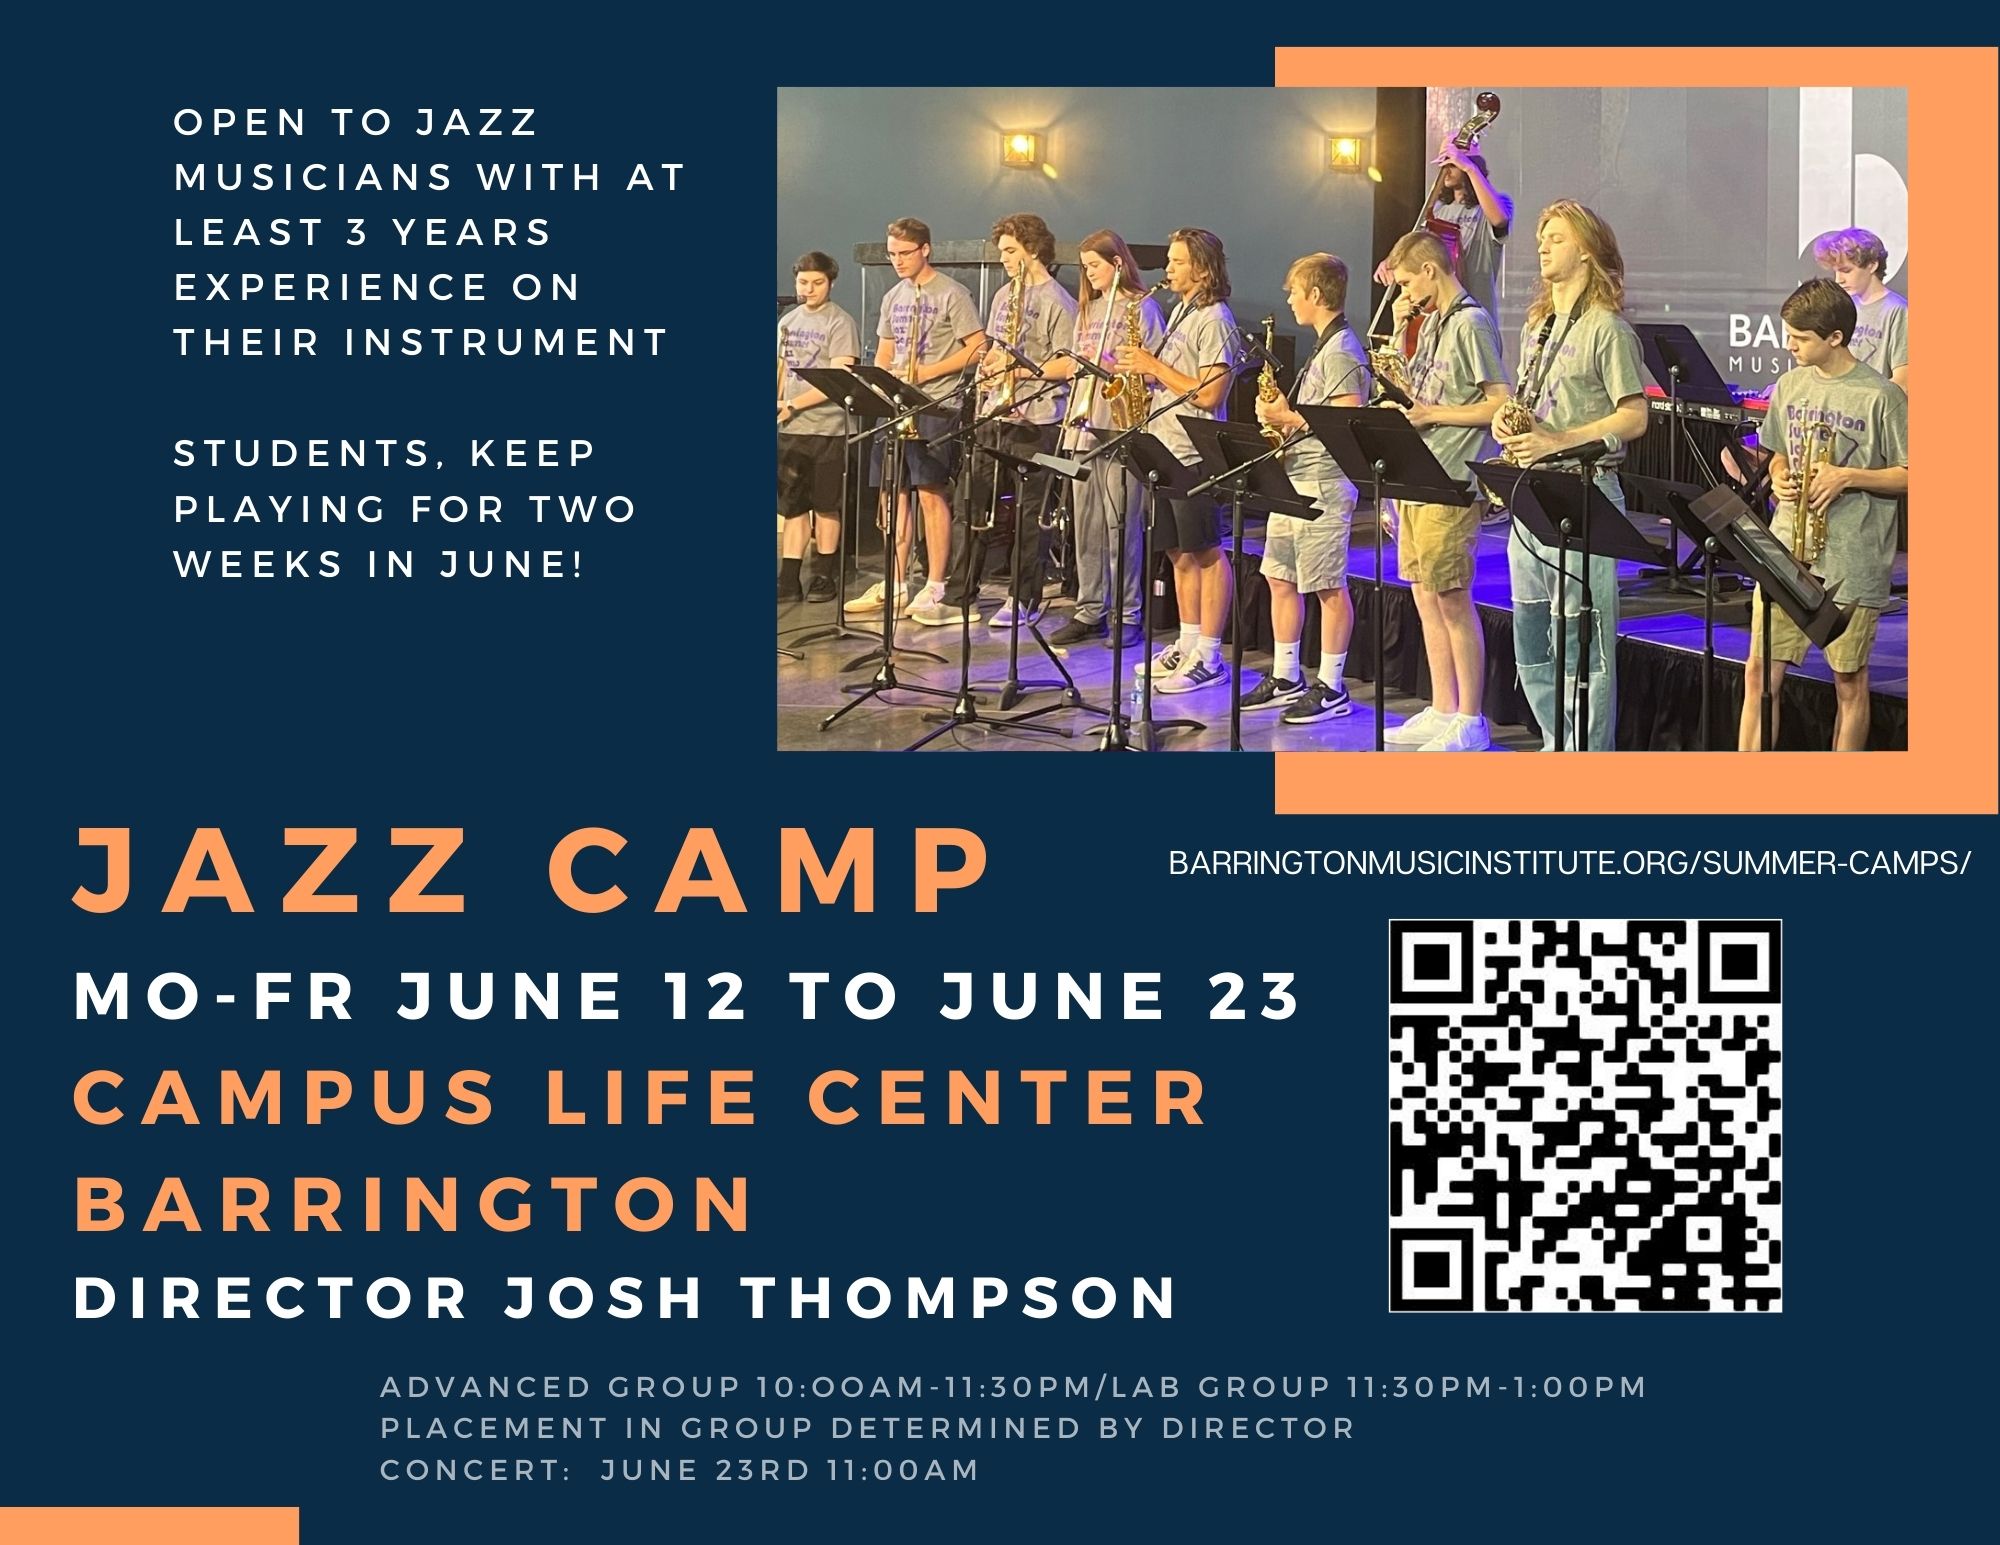 Summer Jazz Camp Barrington Music Institute